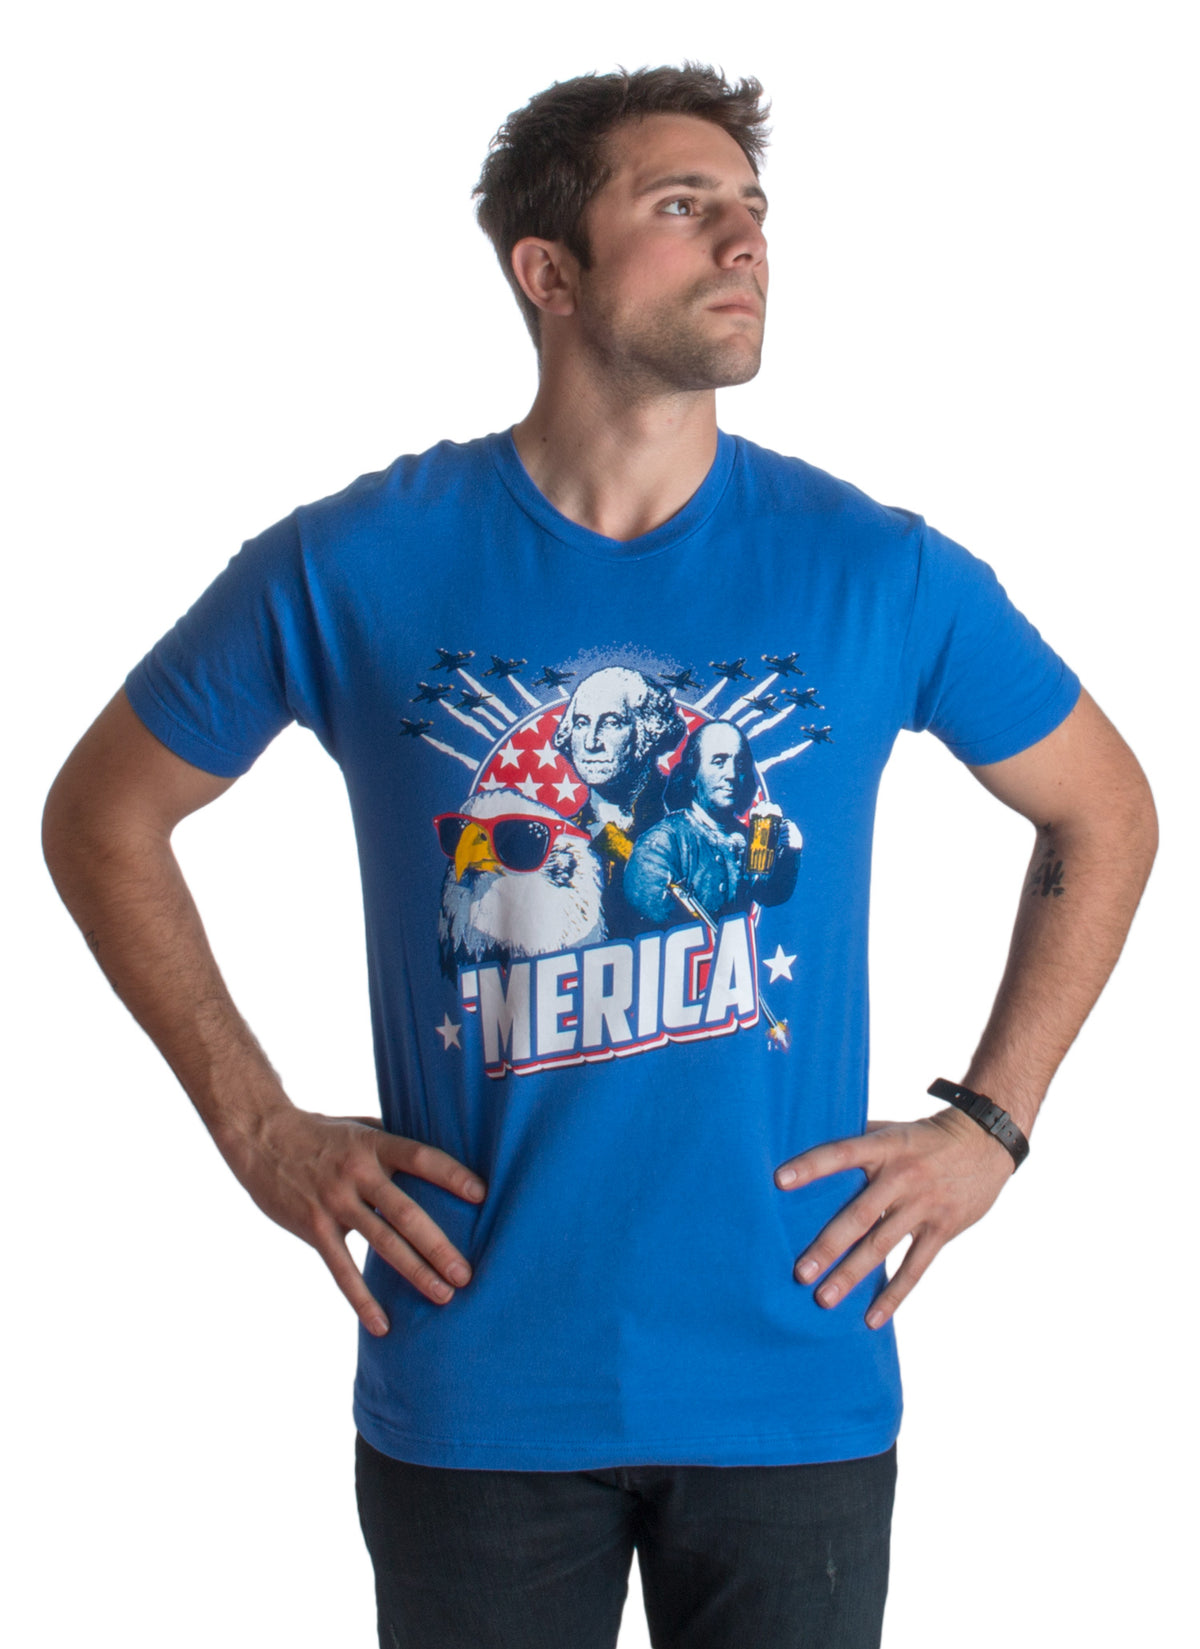 MERICA | Epic USA Patriotic American Party Patriot Unisex T-shirt Men Women